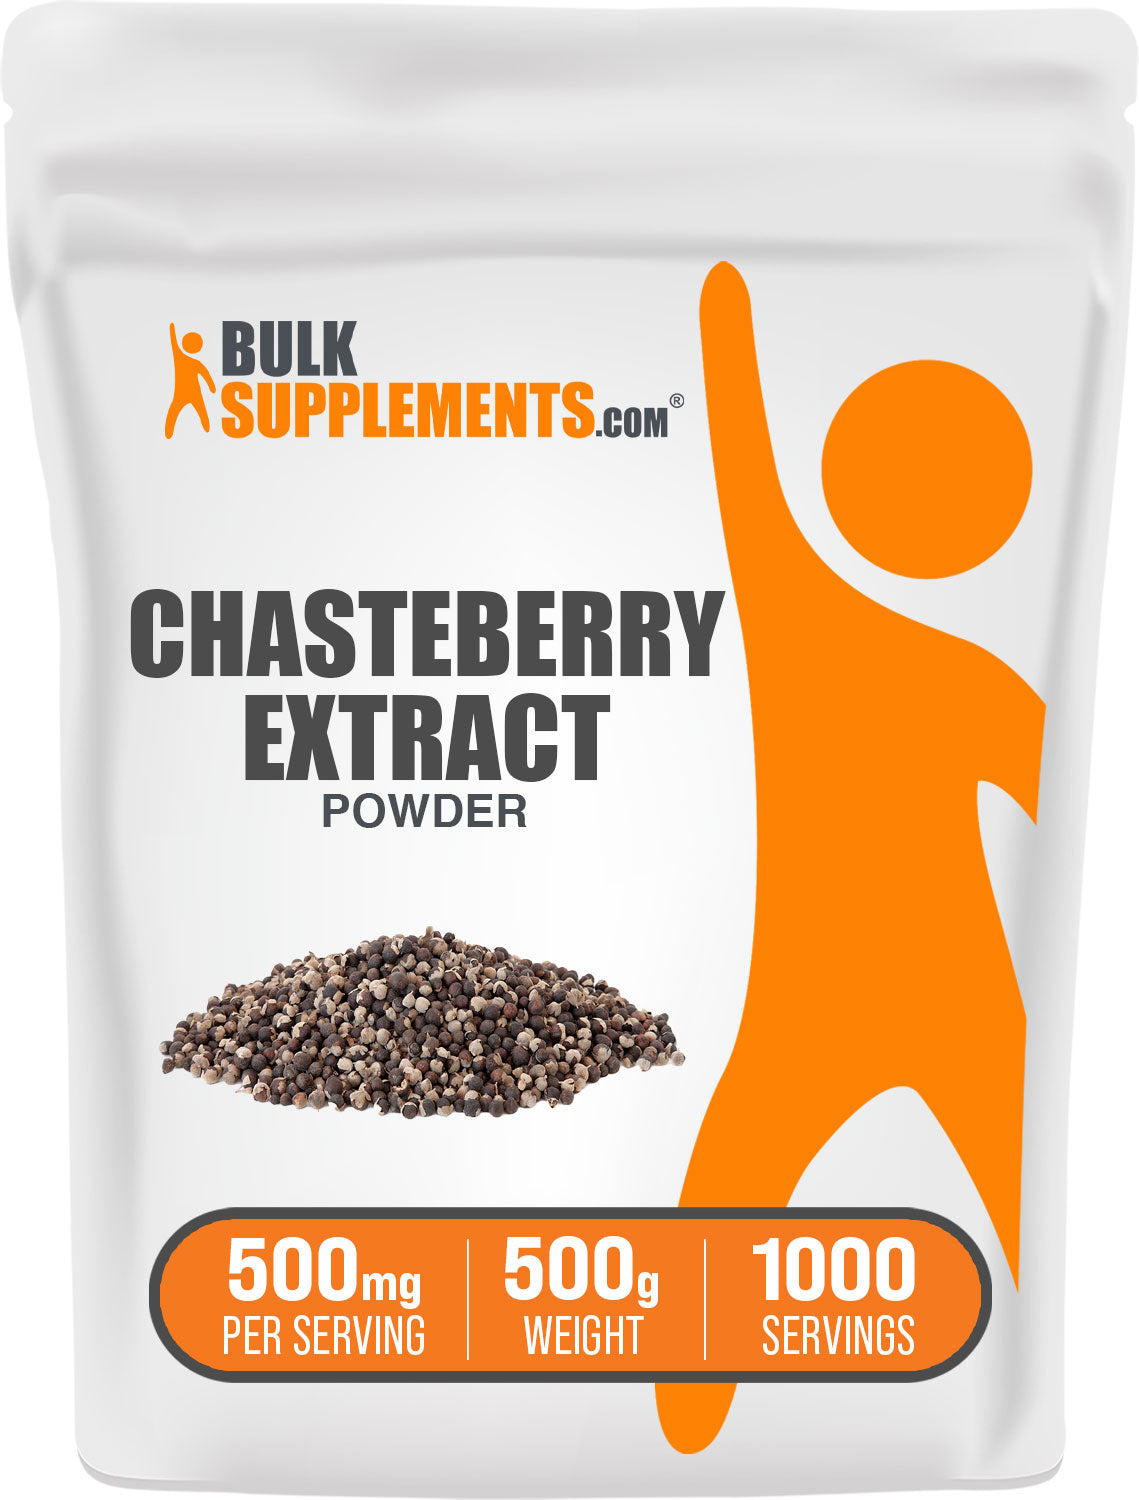 BulkSupplements.com Chasteberry Extract Powder 500g Bag